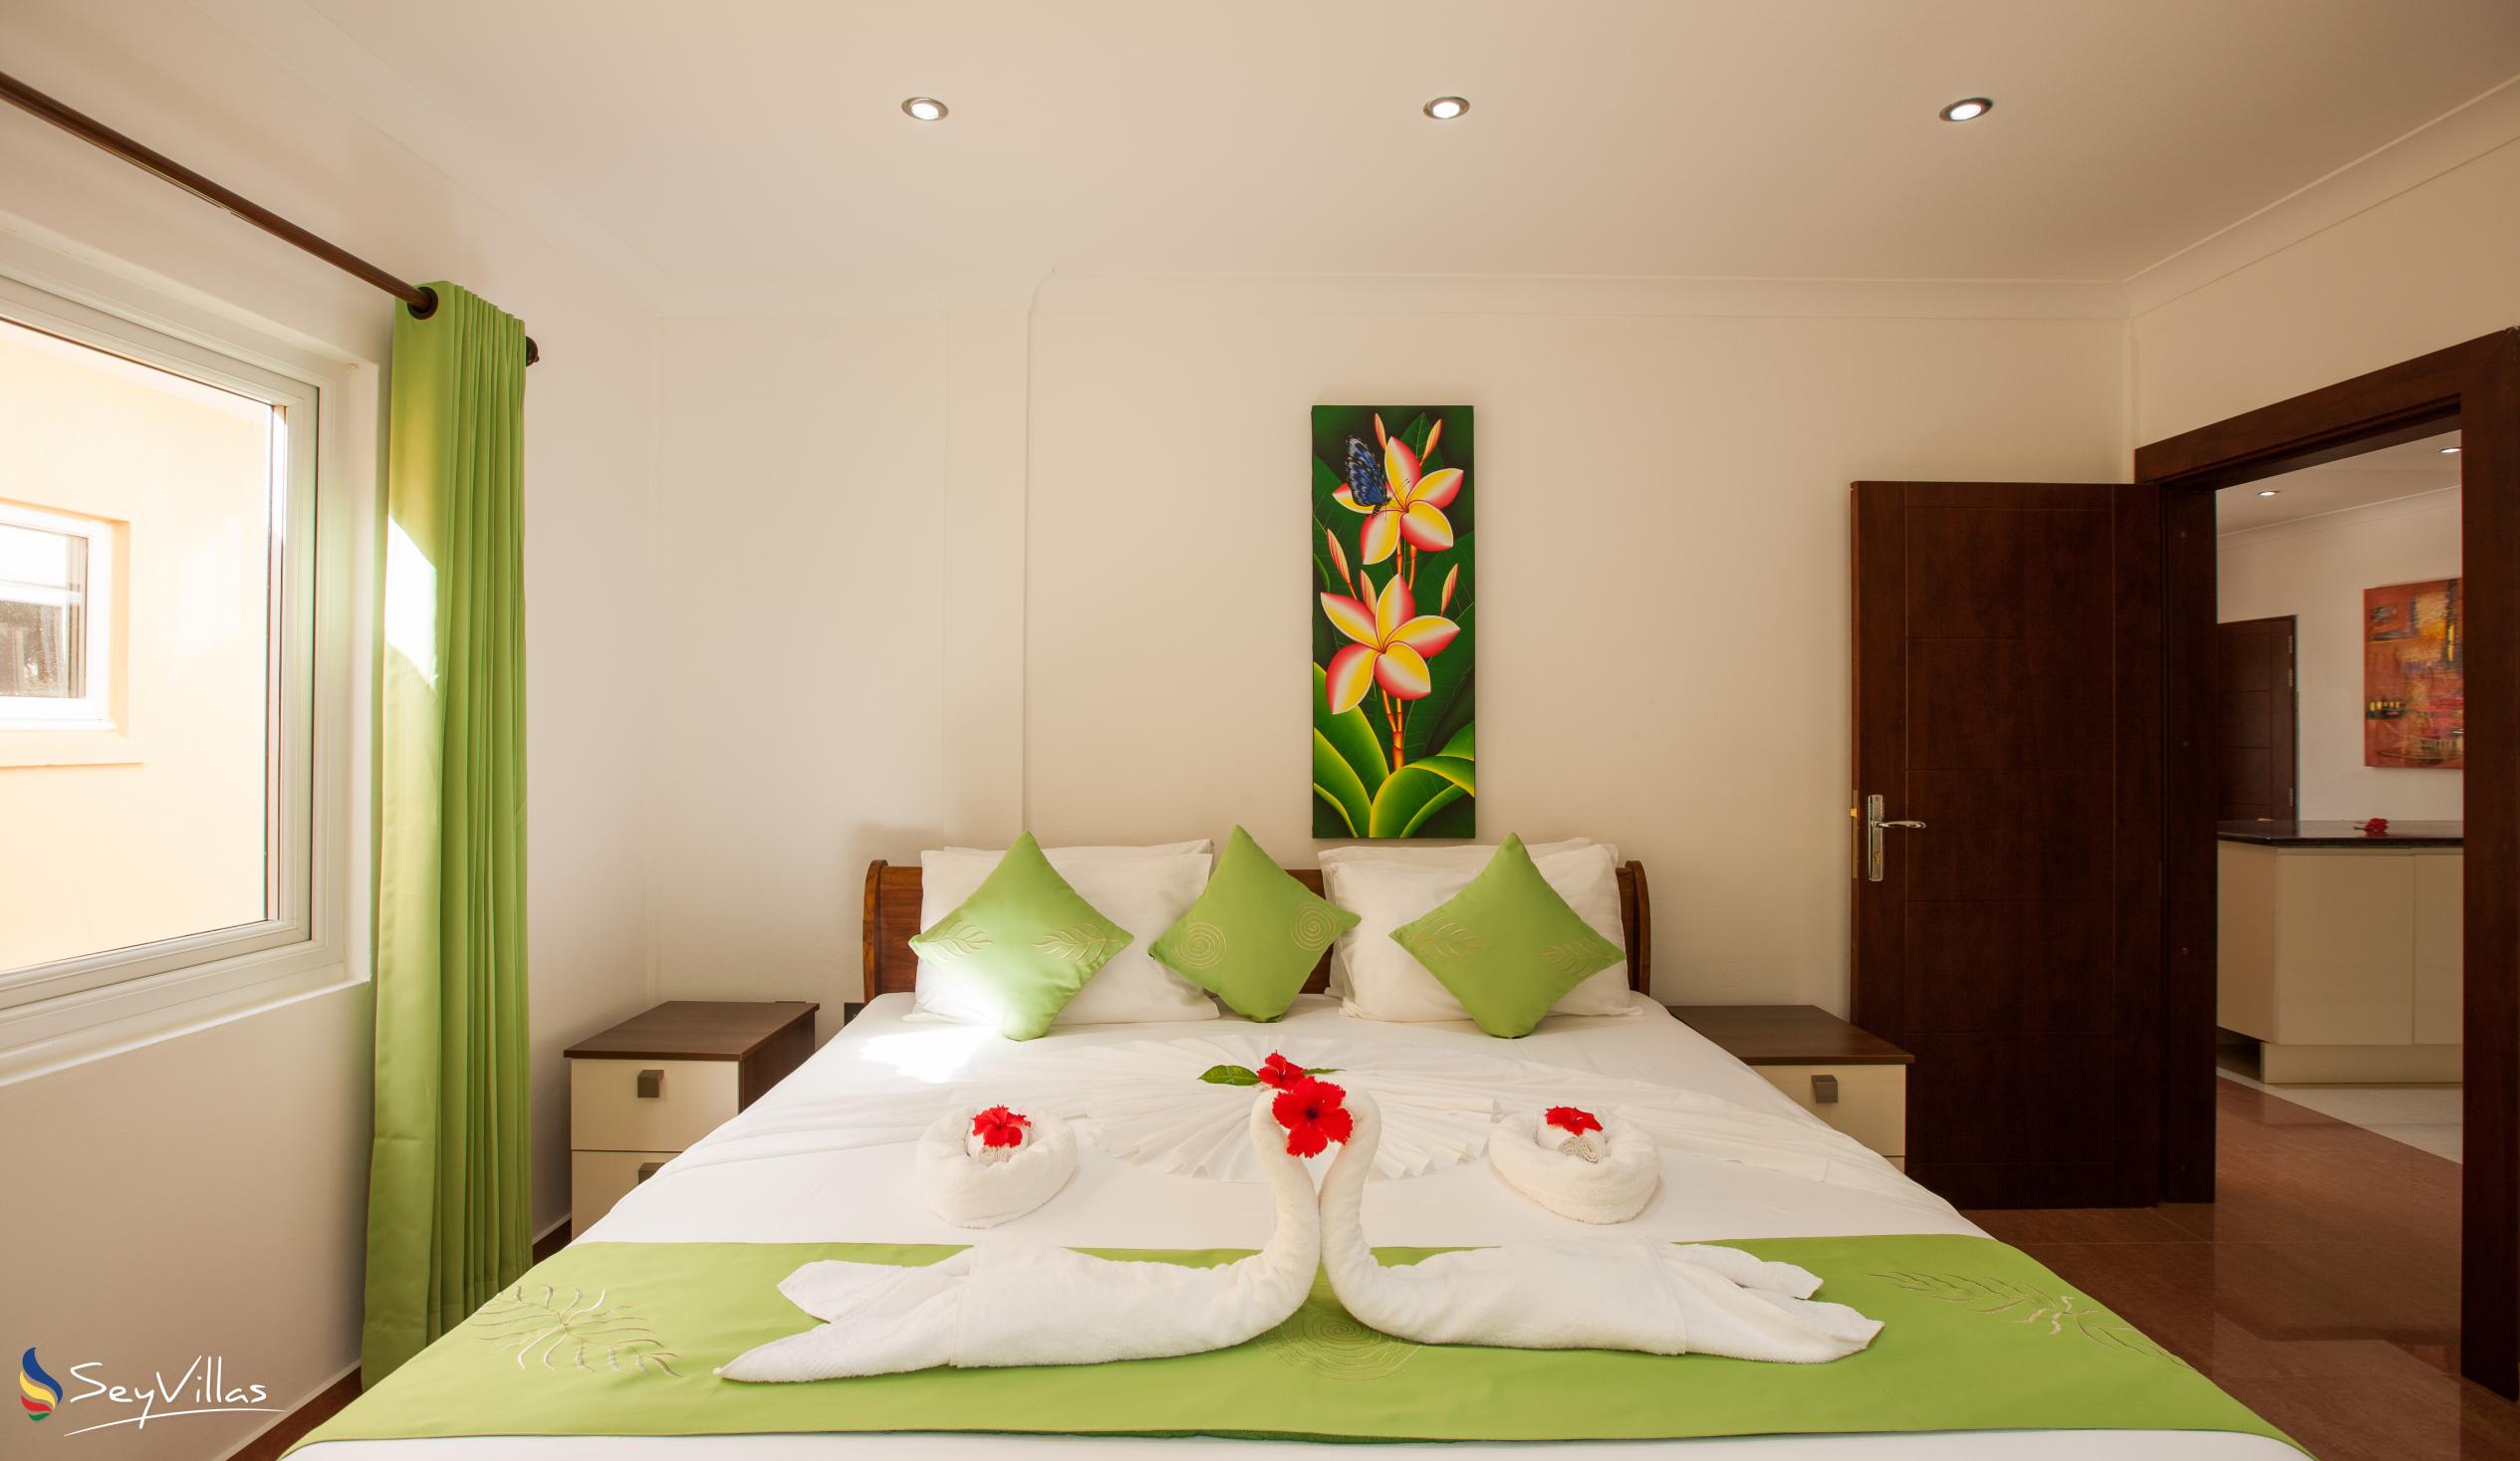 Photo 54: YASAD Luxury Beach Residence - 2-Bedroom Apartment - Praslin (Seychelles)